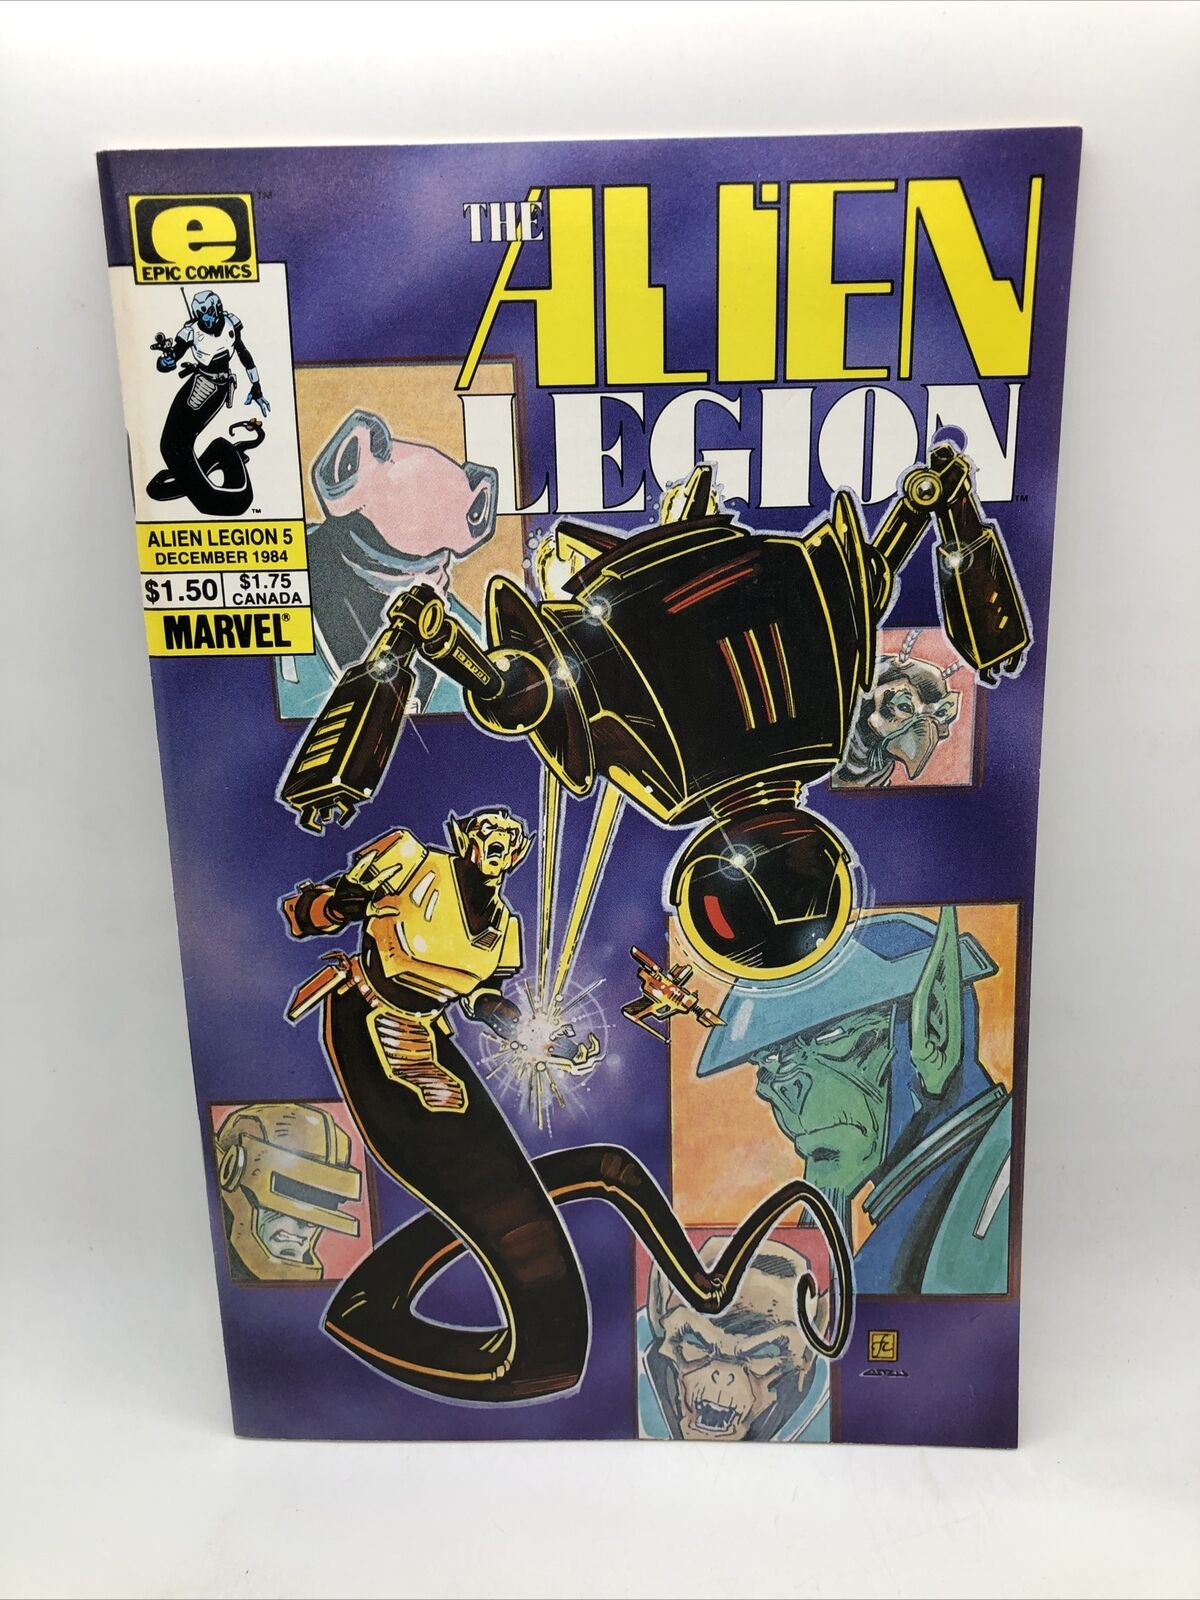 The Alien Legion #5 (December 1984) Marvel/Epic Comics Gem